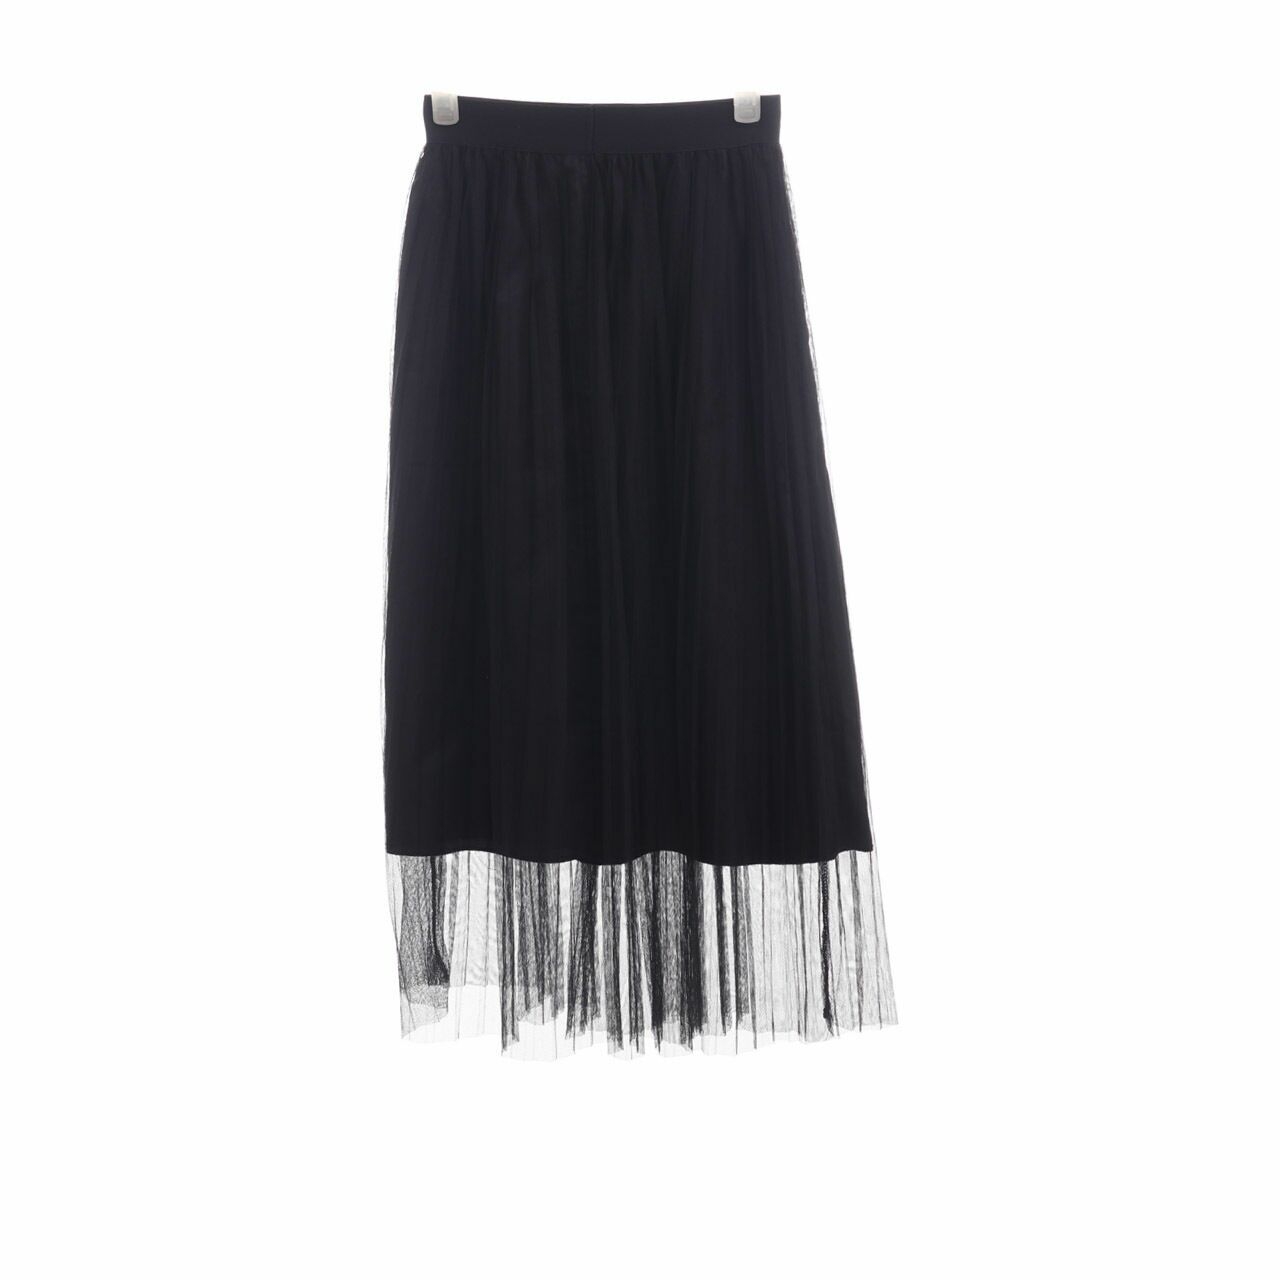 Zara Black Tule Midi Skirt